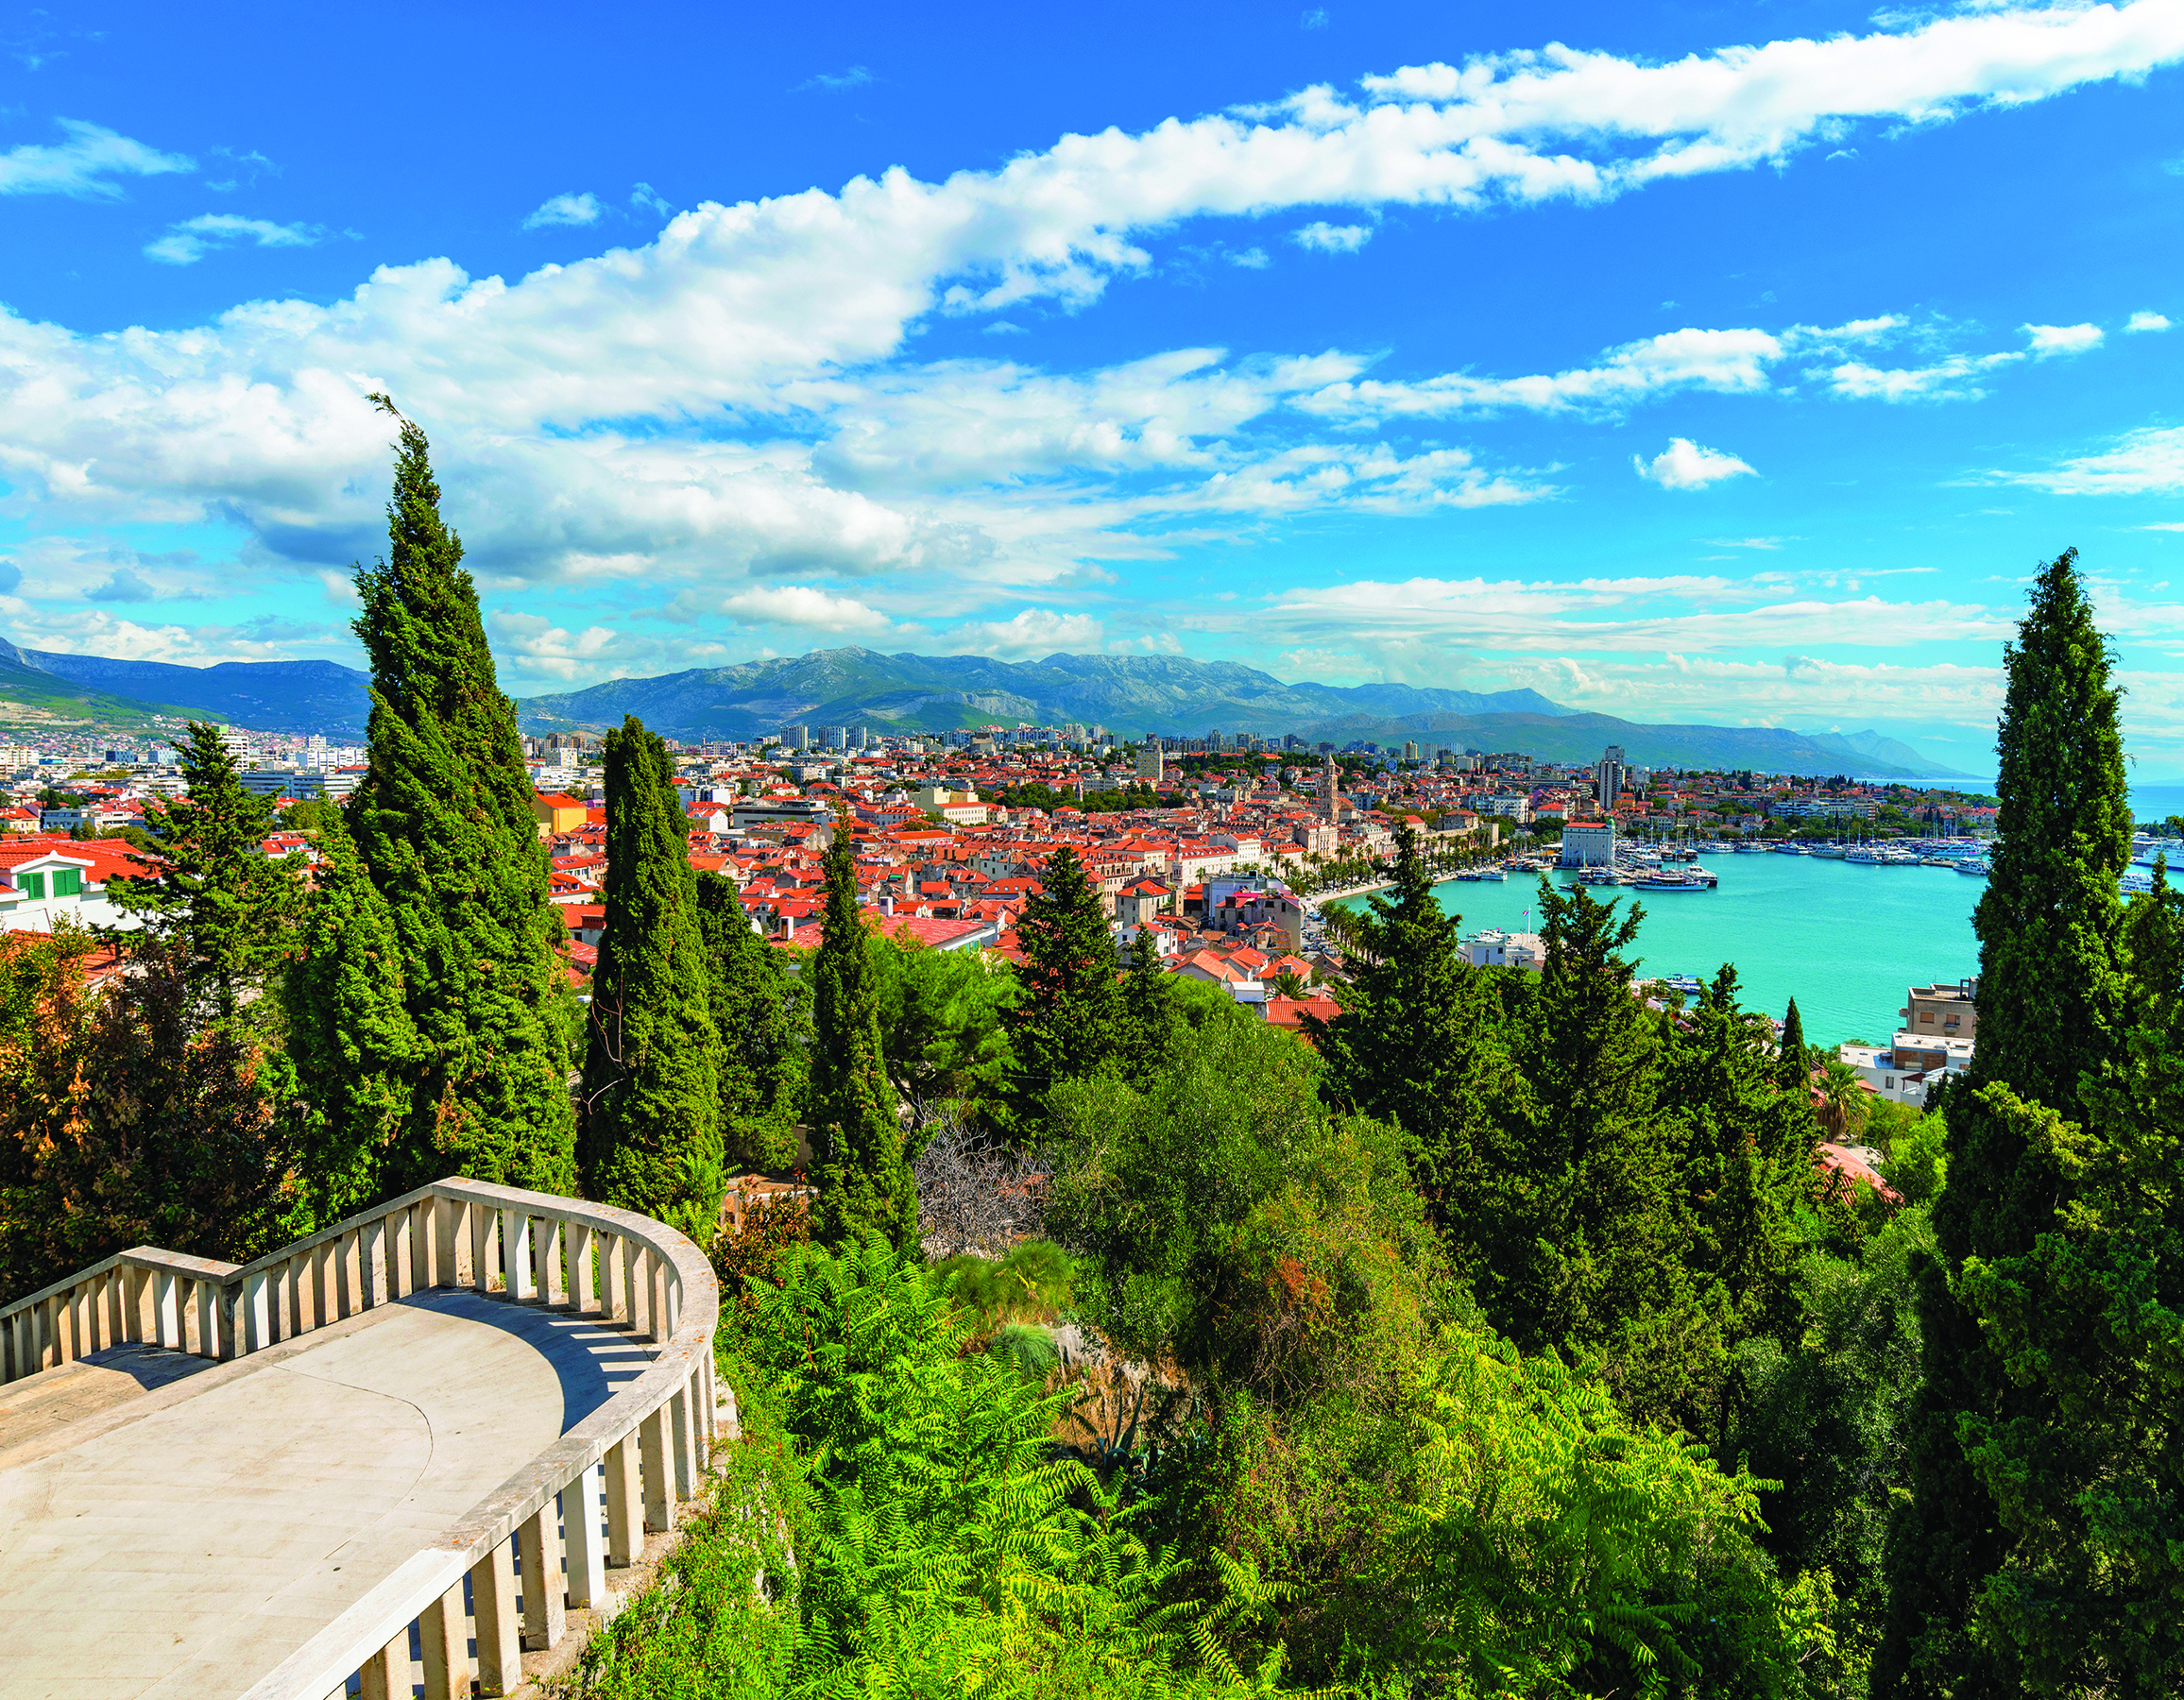 Photograph from hill top overlooking Split, Croatia.